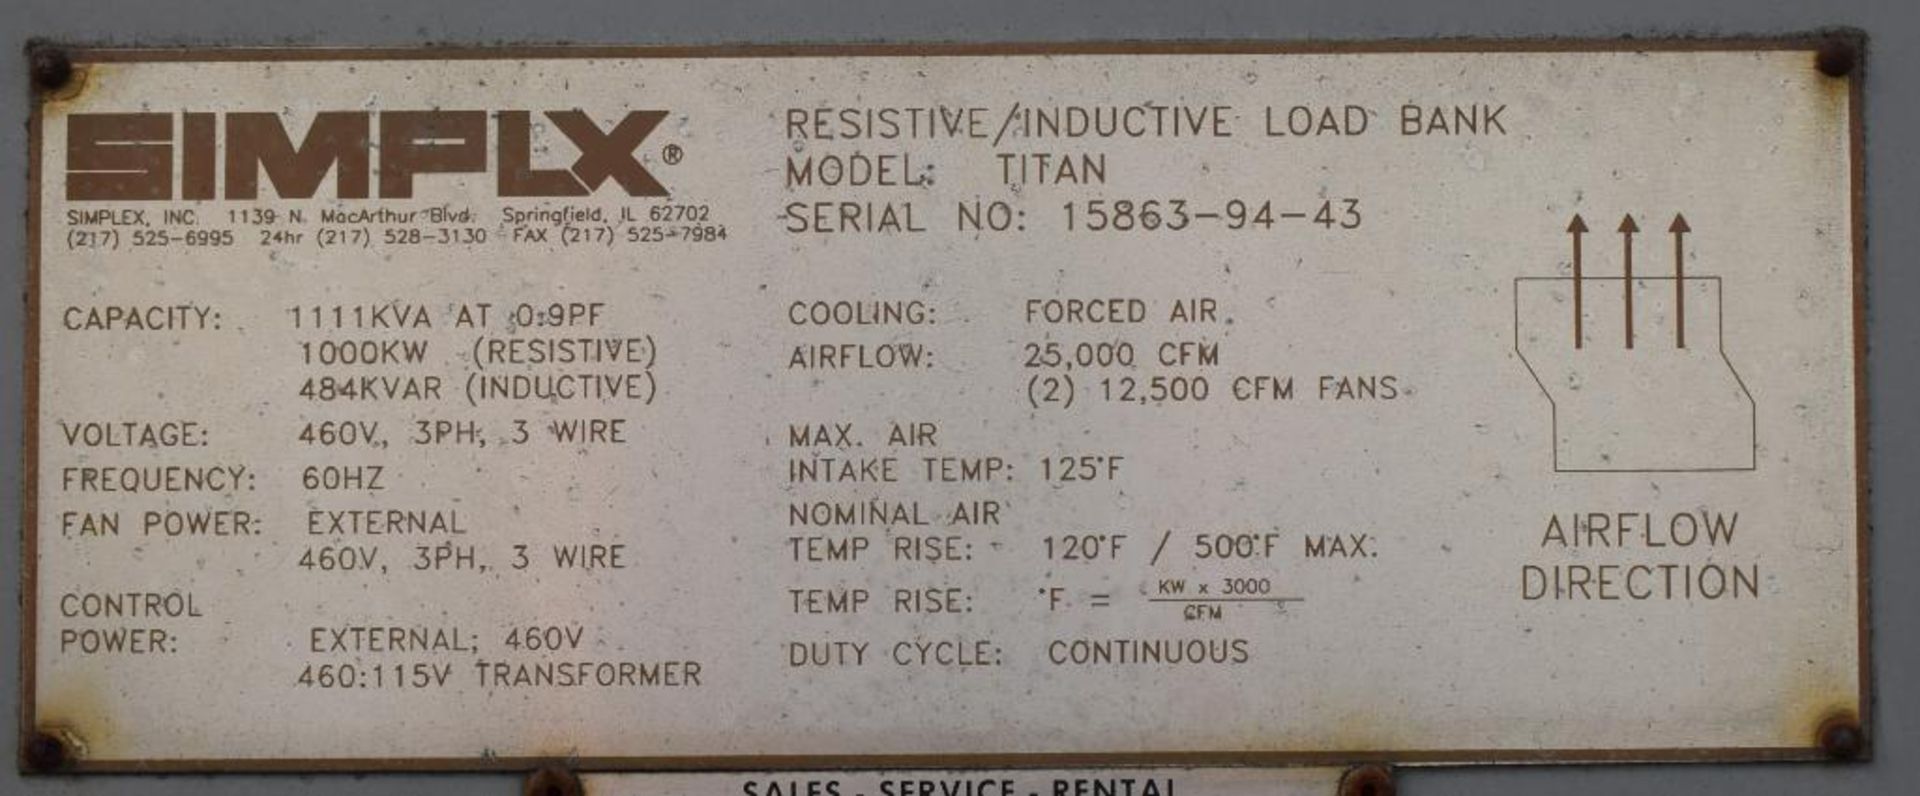 Simplex 1000kw Resistive/Inductive Load Bank, Model Titan, Serial# 15863-94-43. - Image 8 of 9